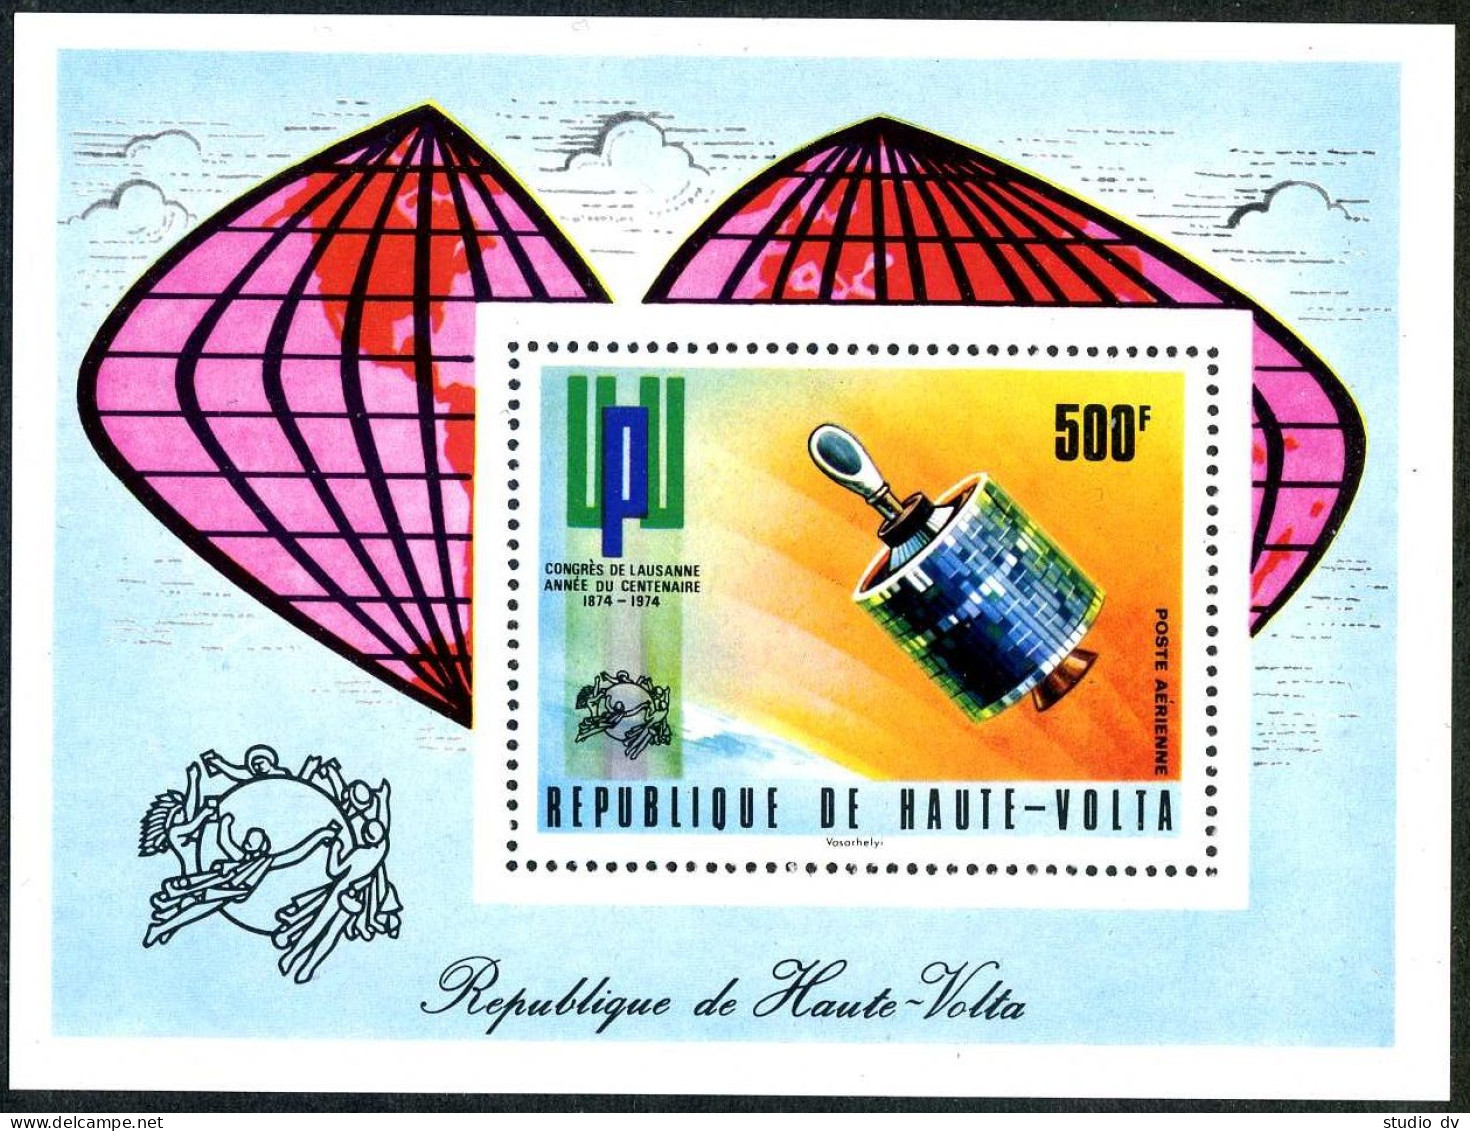 Burkina Faso 332-C191, C192, MNH. UPU-100,1974. Mail Transport,Satellite,Pigeon. - Burkina Faso (1984-...)